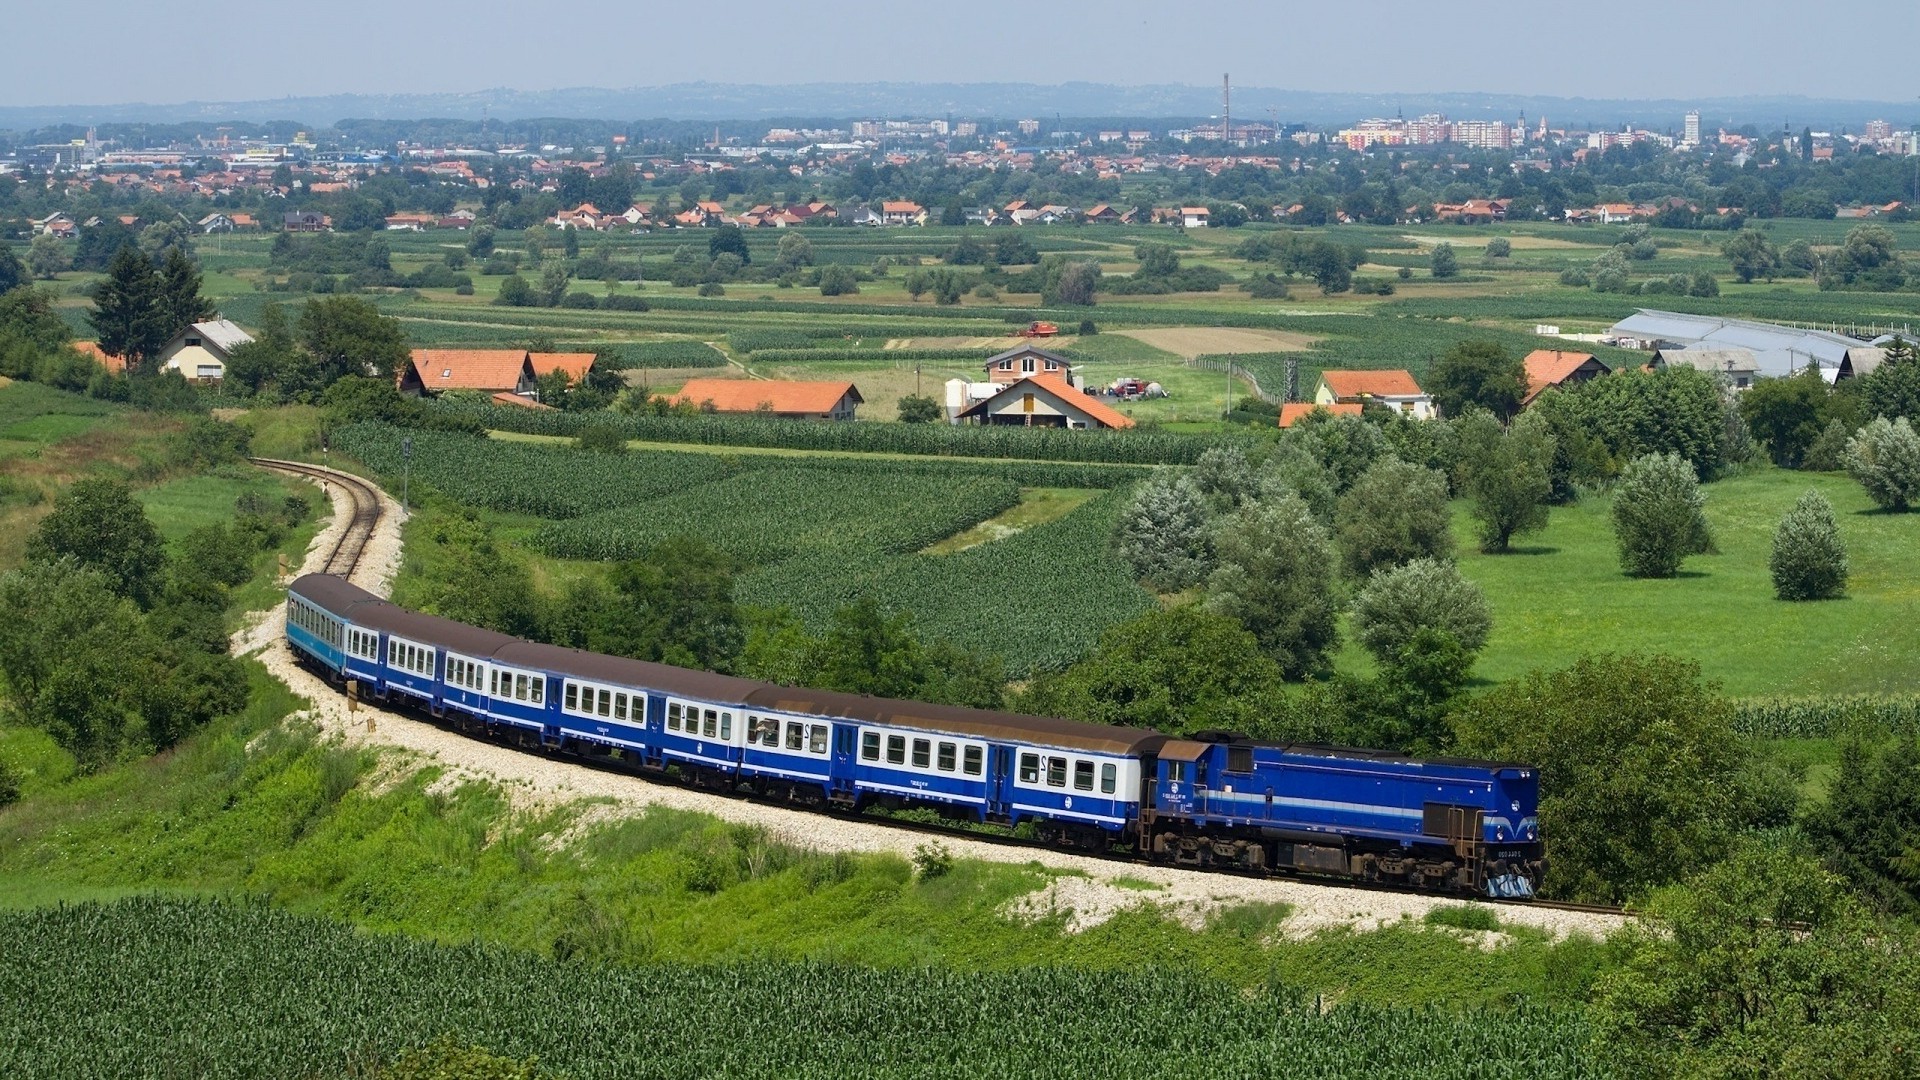 1920x1080 wallpapers: 火车，结构，蓝色，田野，树木，从上面，城市，郊区，距离，夏天，铁路 (image)